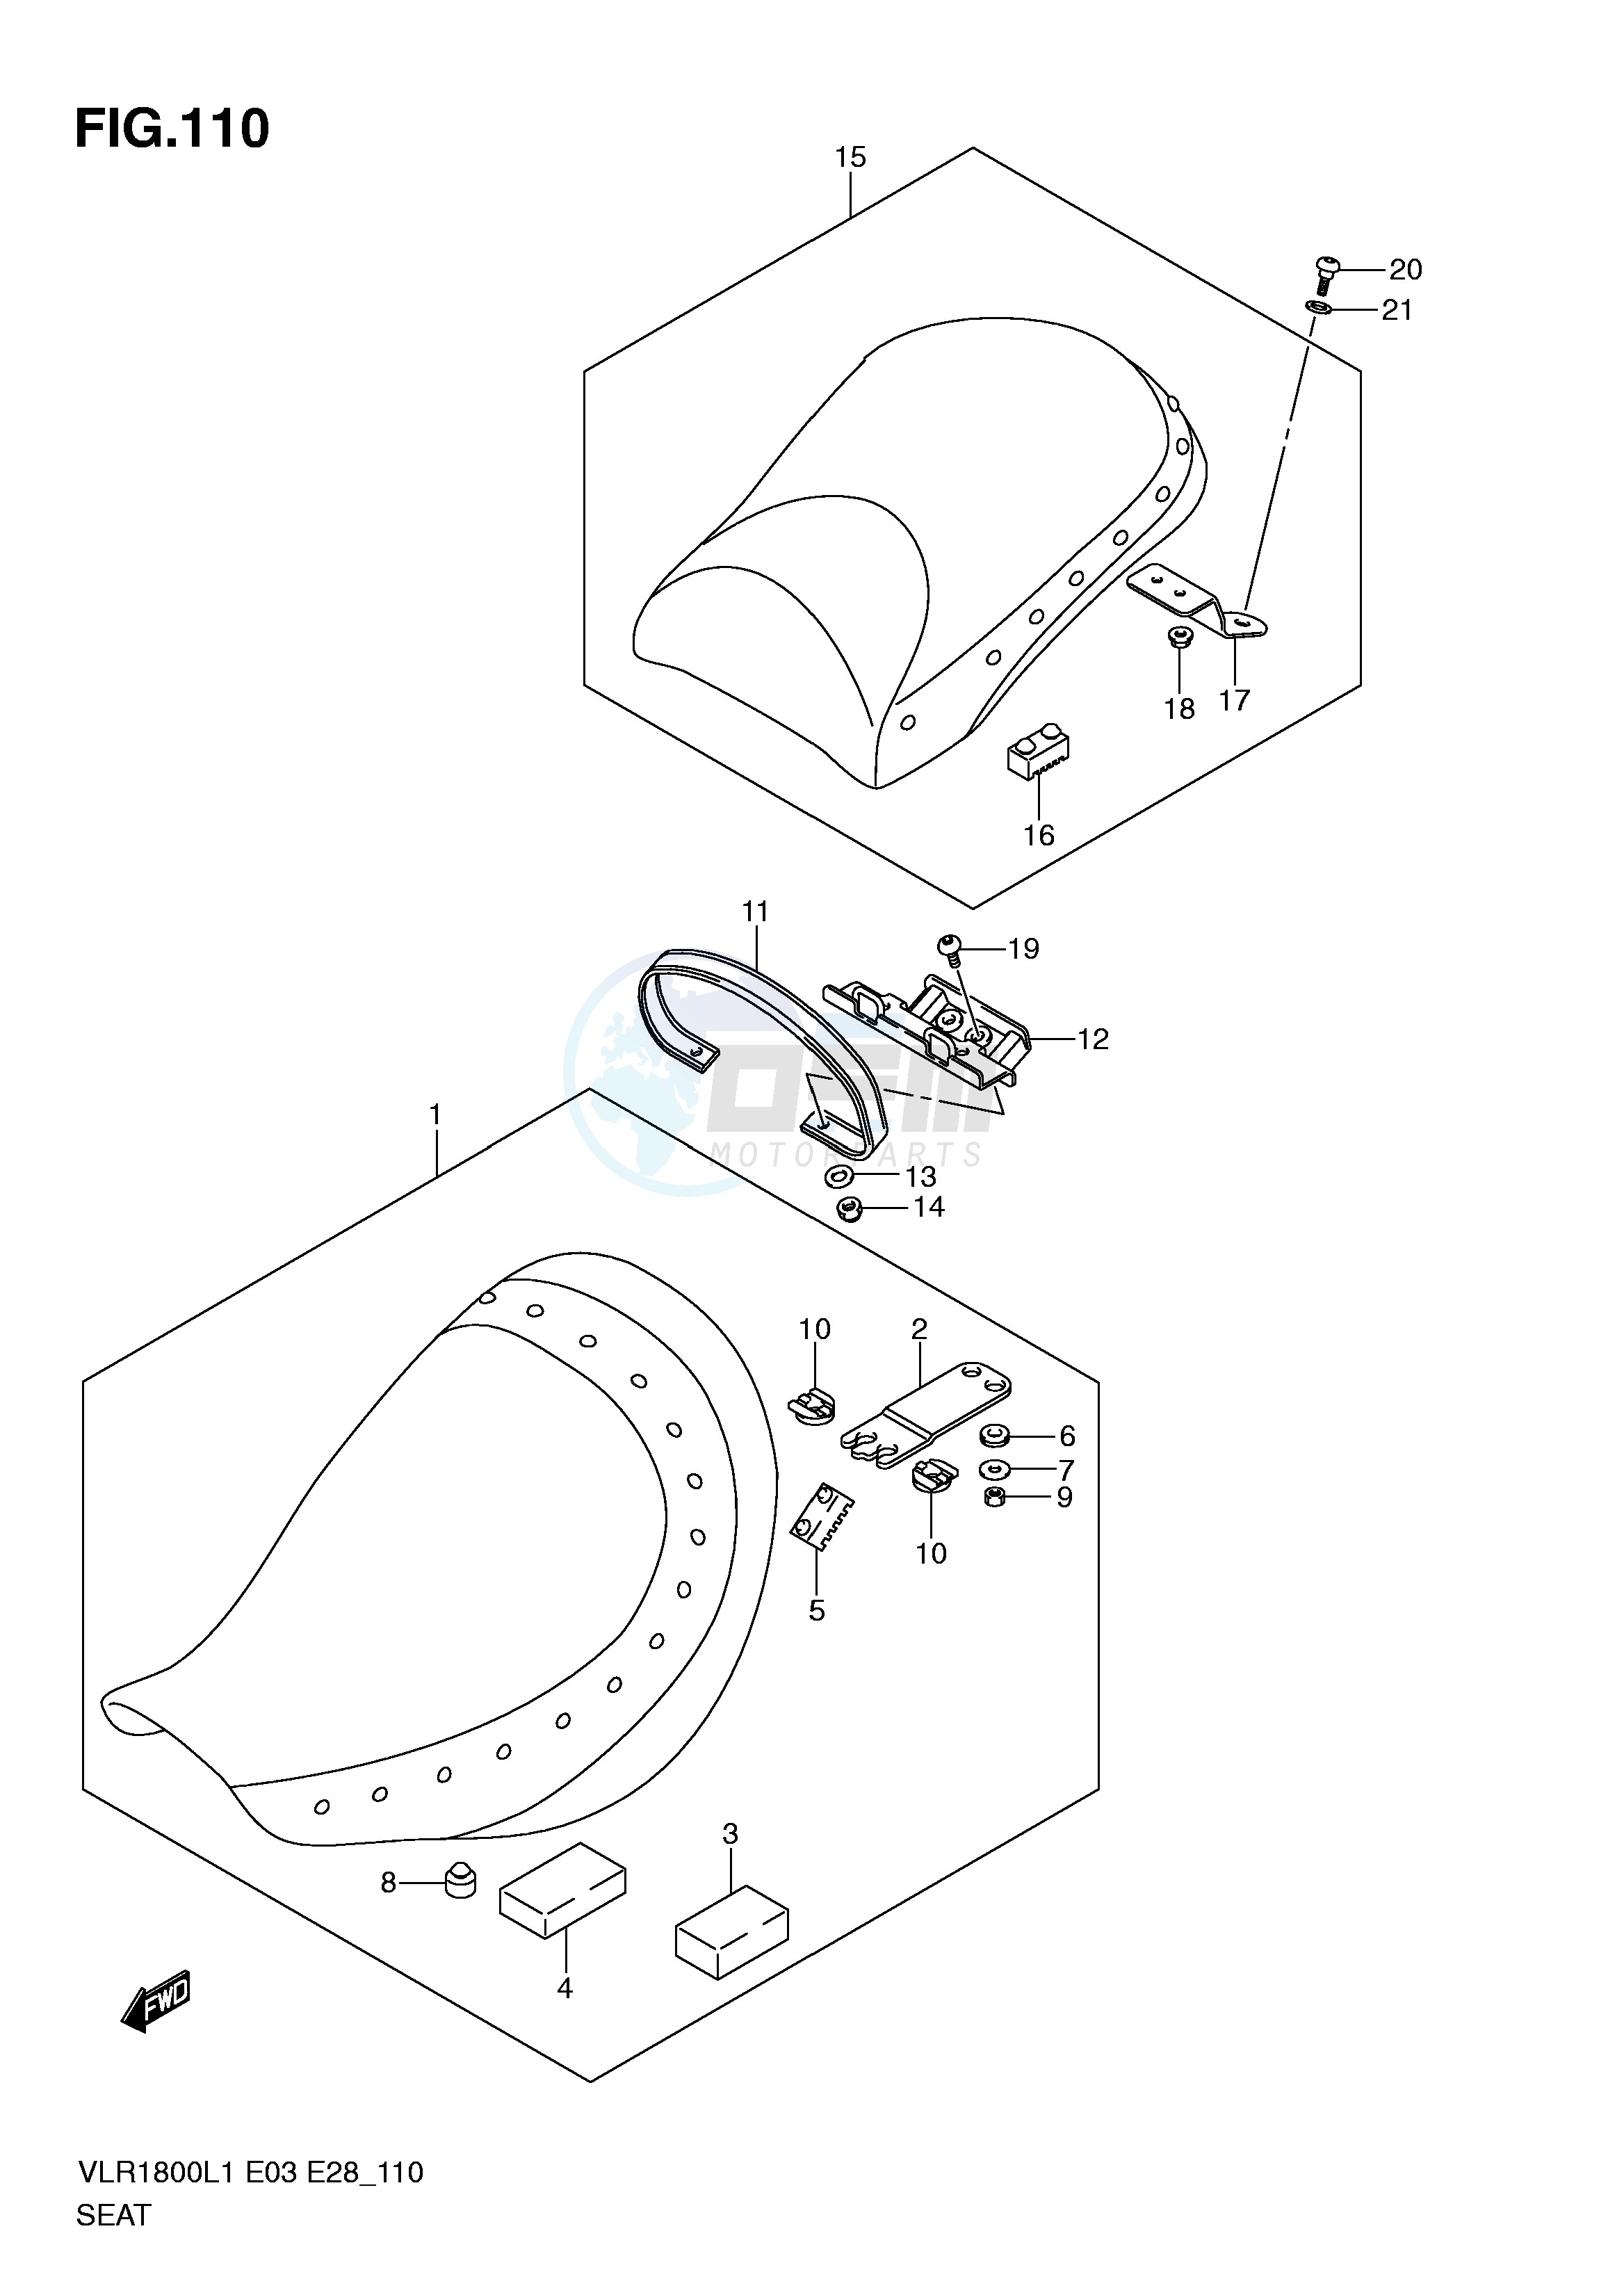 SEAT (VLR1800TL1 E33) blueprint